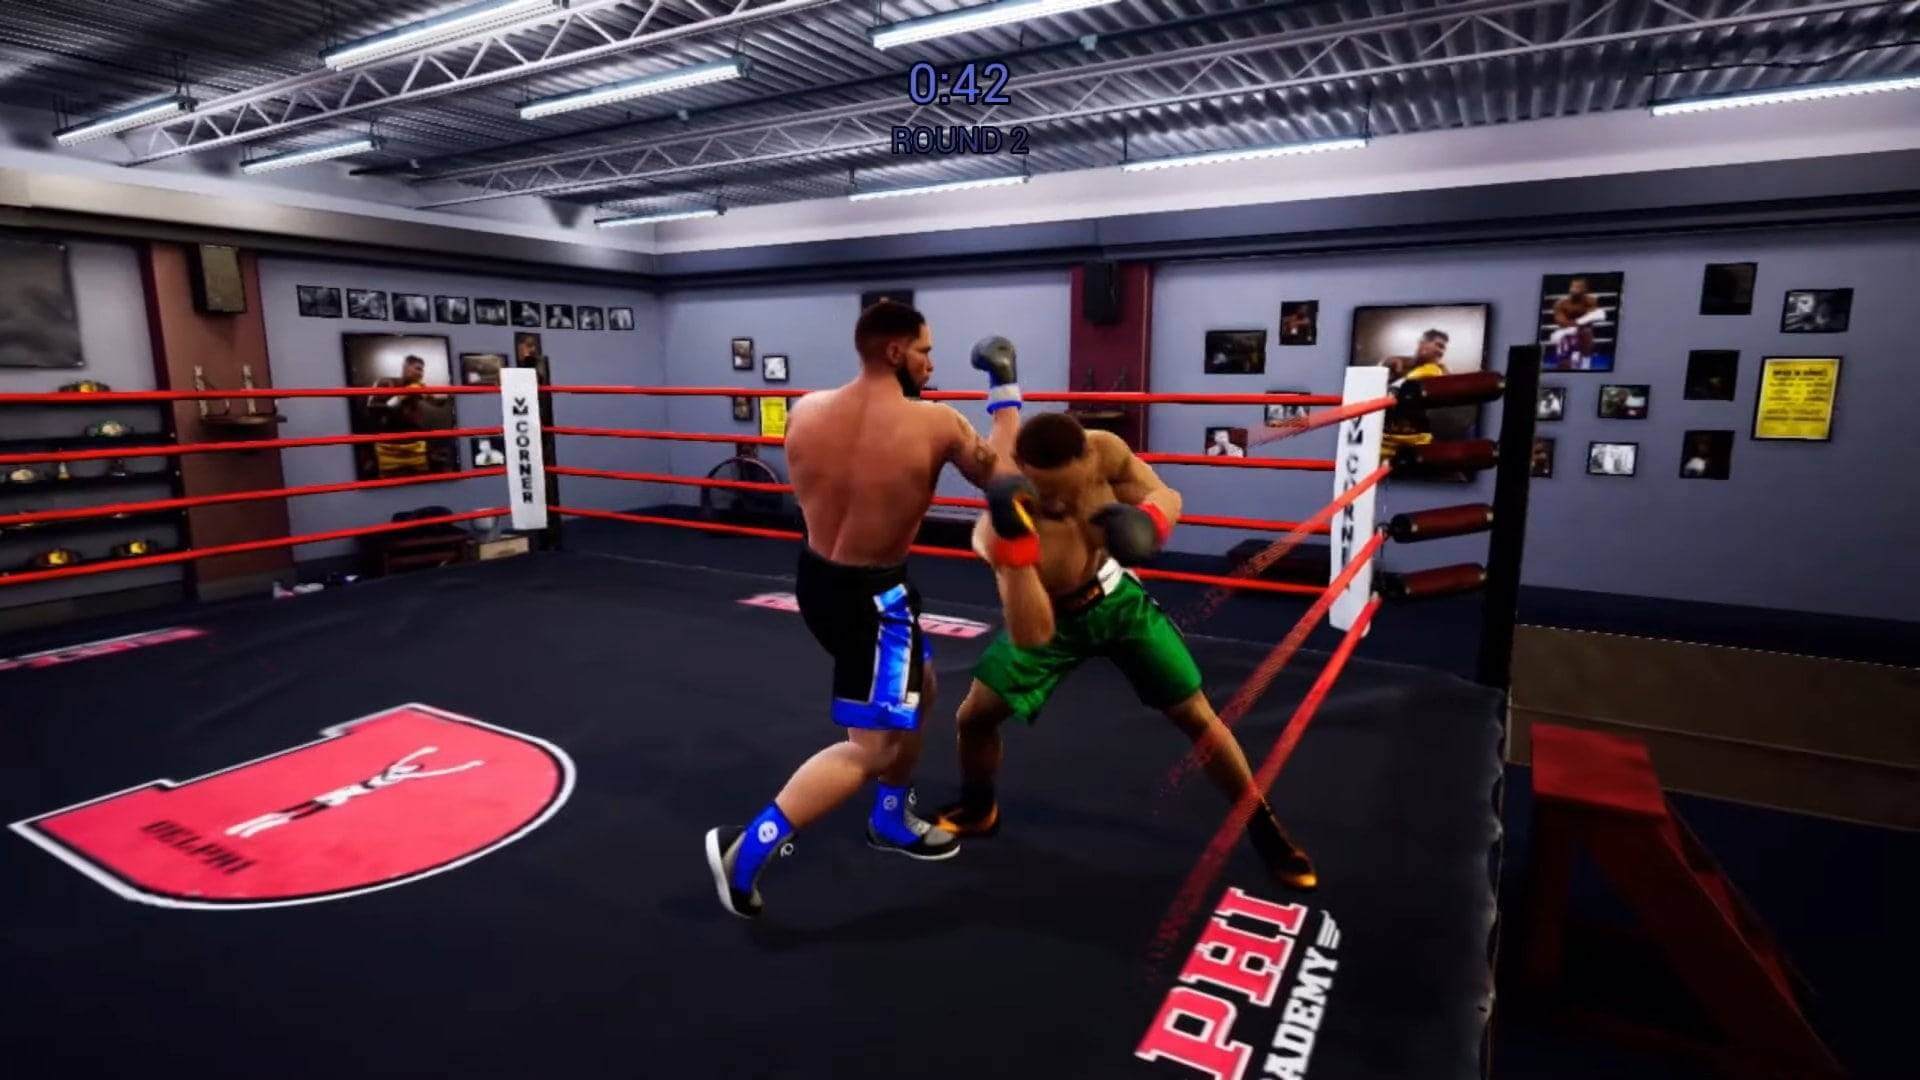 Nintendo boxing. Big Rumble Boxing: Creed Champions. Rumble Boxing Creed Champions. Big Rumble Boxing Creed Champions Nintendo. Ps3 big Rumble Boxing.